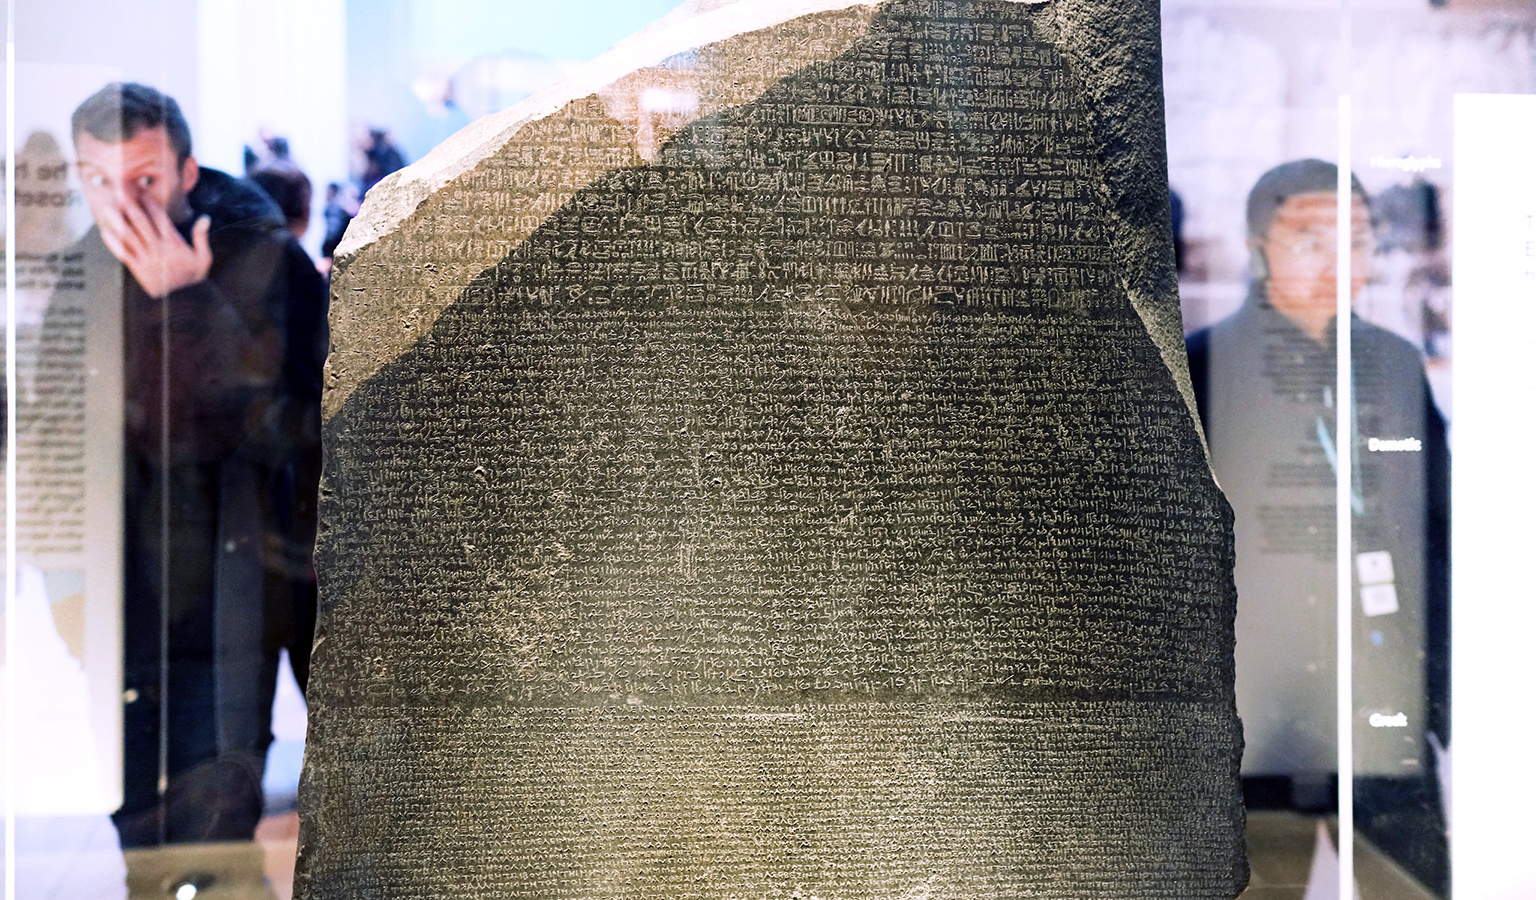 Visitors view the Rosetta Stone in the British Museum (photo: Dr. Steven Zucker, CC BY-NC-SA 2.0)